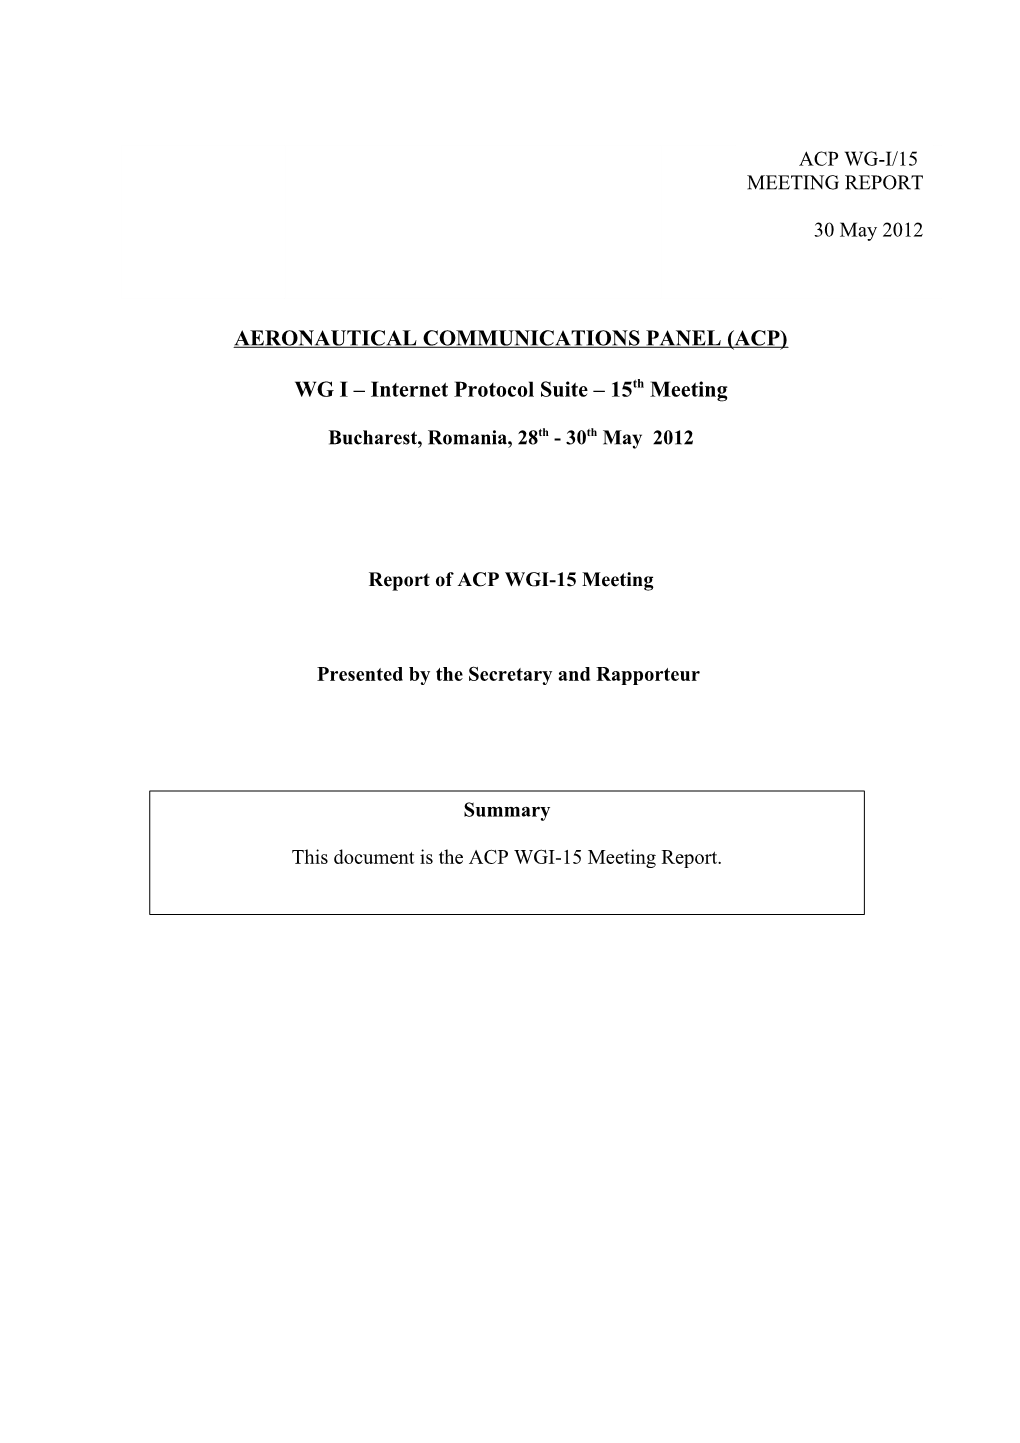 Final Meeting Report of WG-I/15